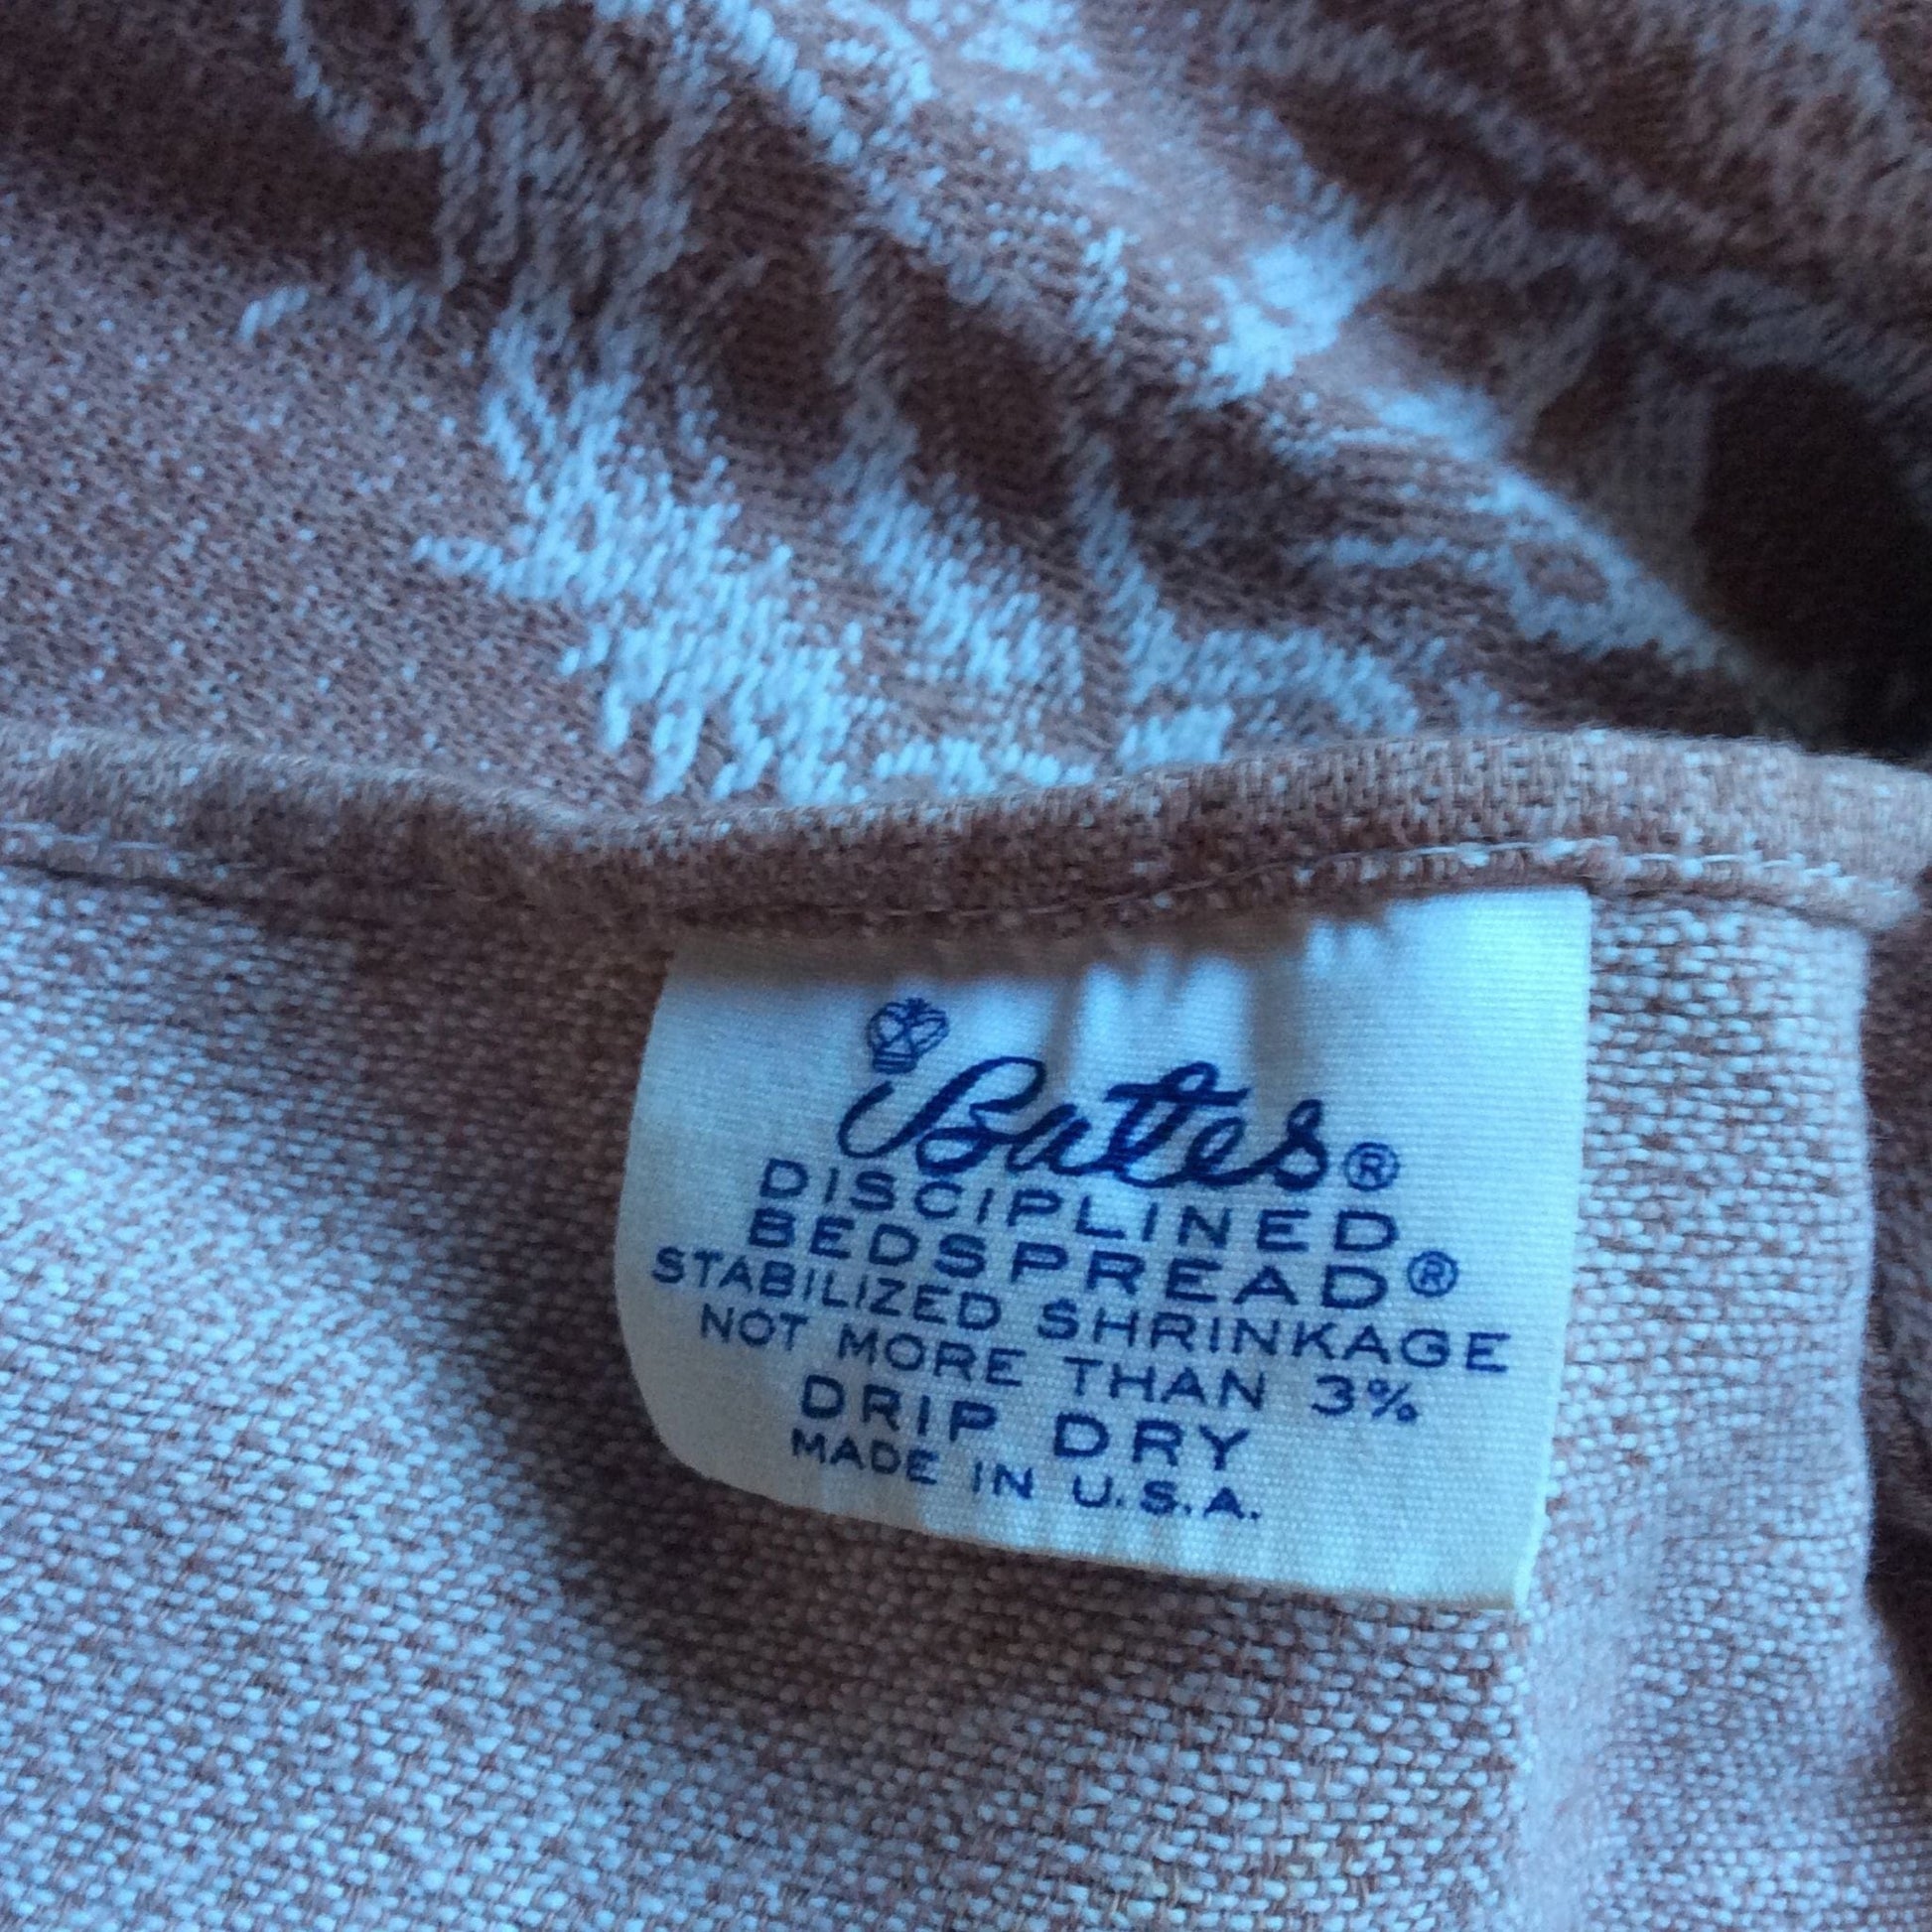 Bates Cutter Bedspread Multi / Cotton / Vintage 1950s